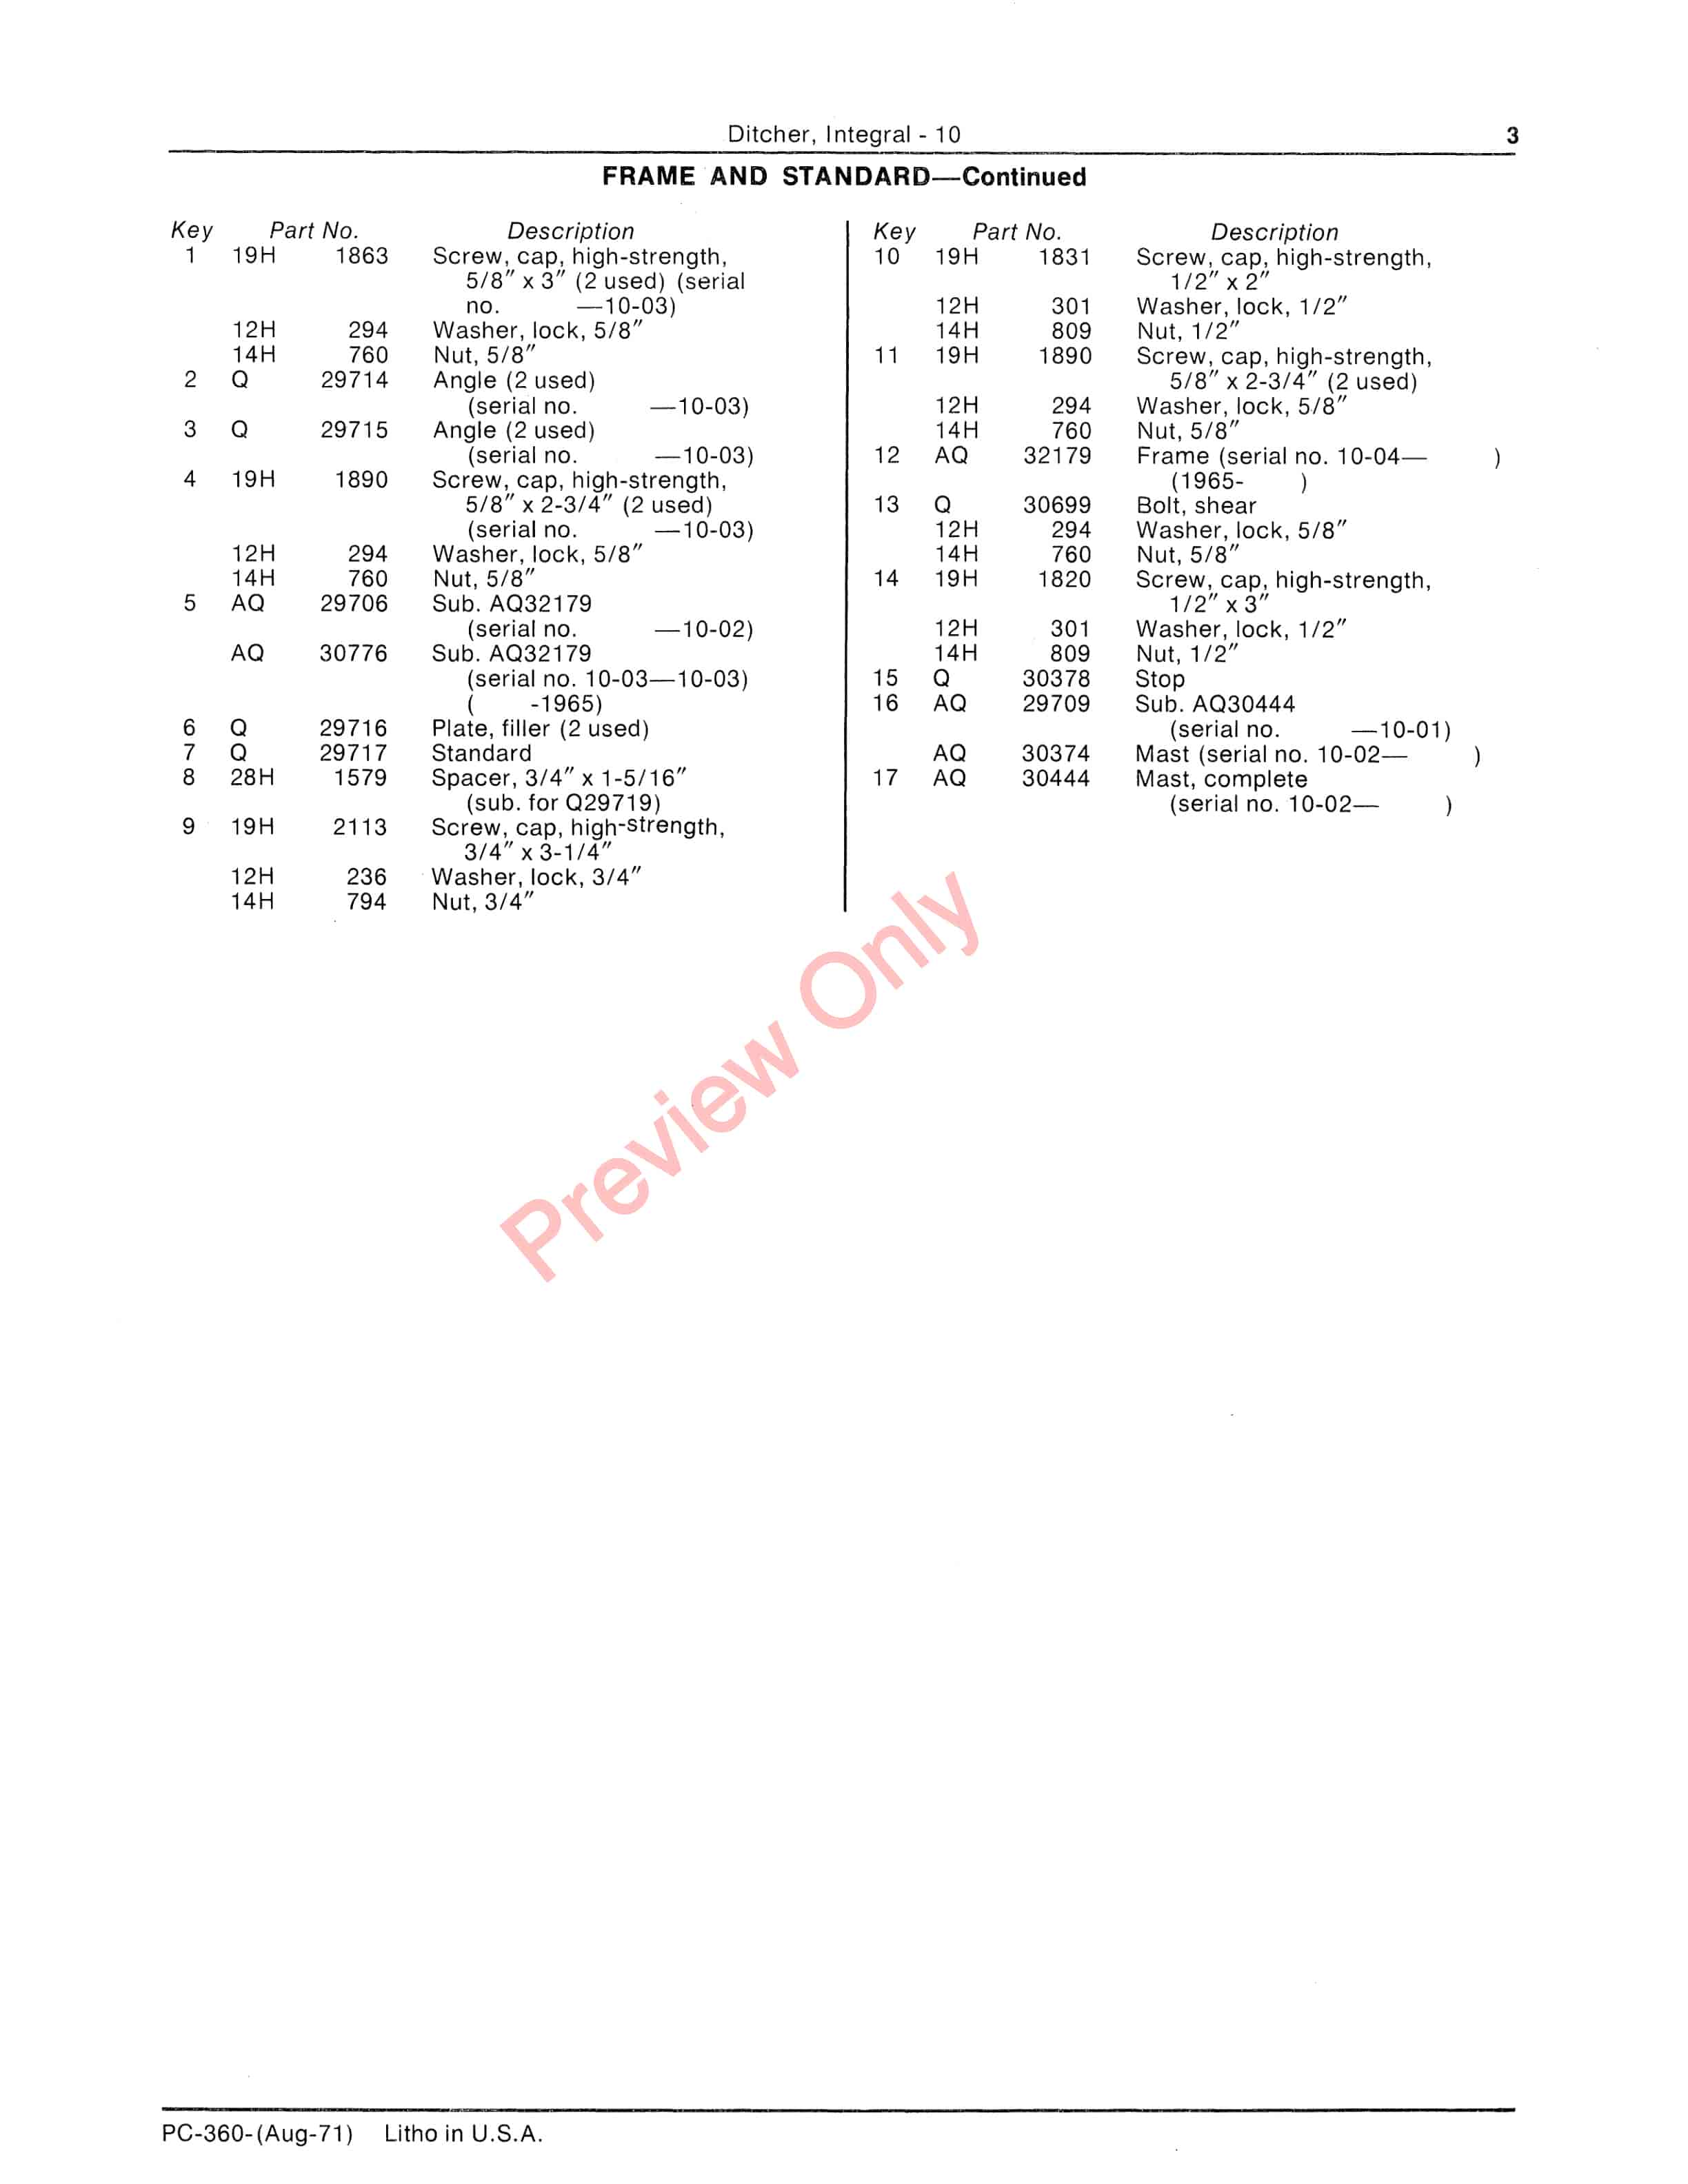 John Deere 10 Integral Ditcher Parts Catalog PC360 01AUG71-5